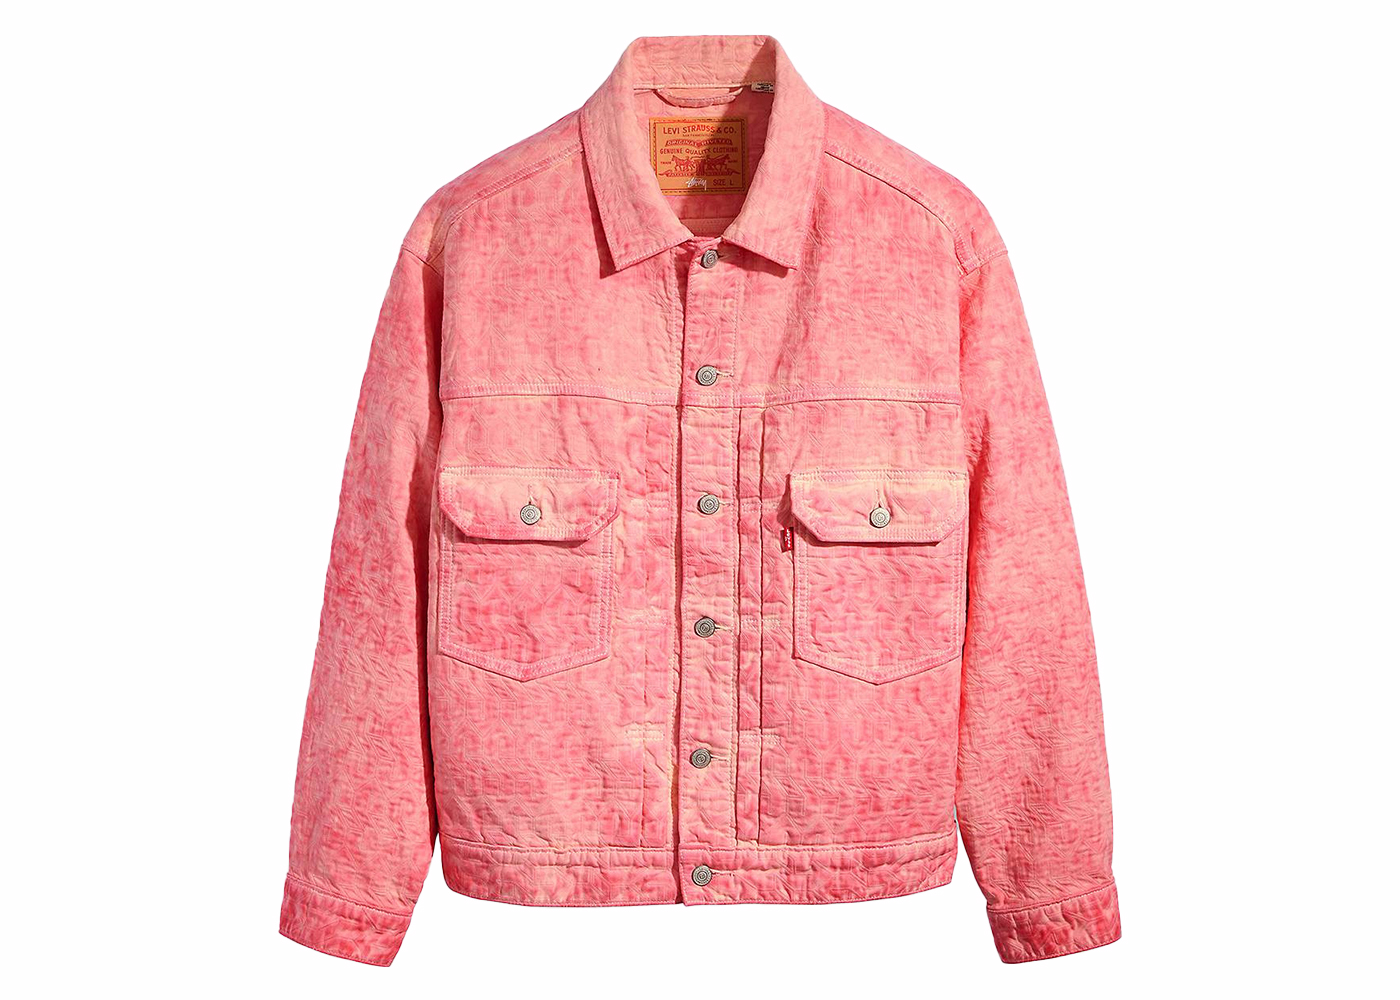 Stussy x Levi's Dyed Jacquard Jacket Pink